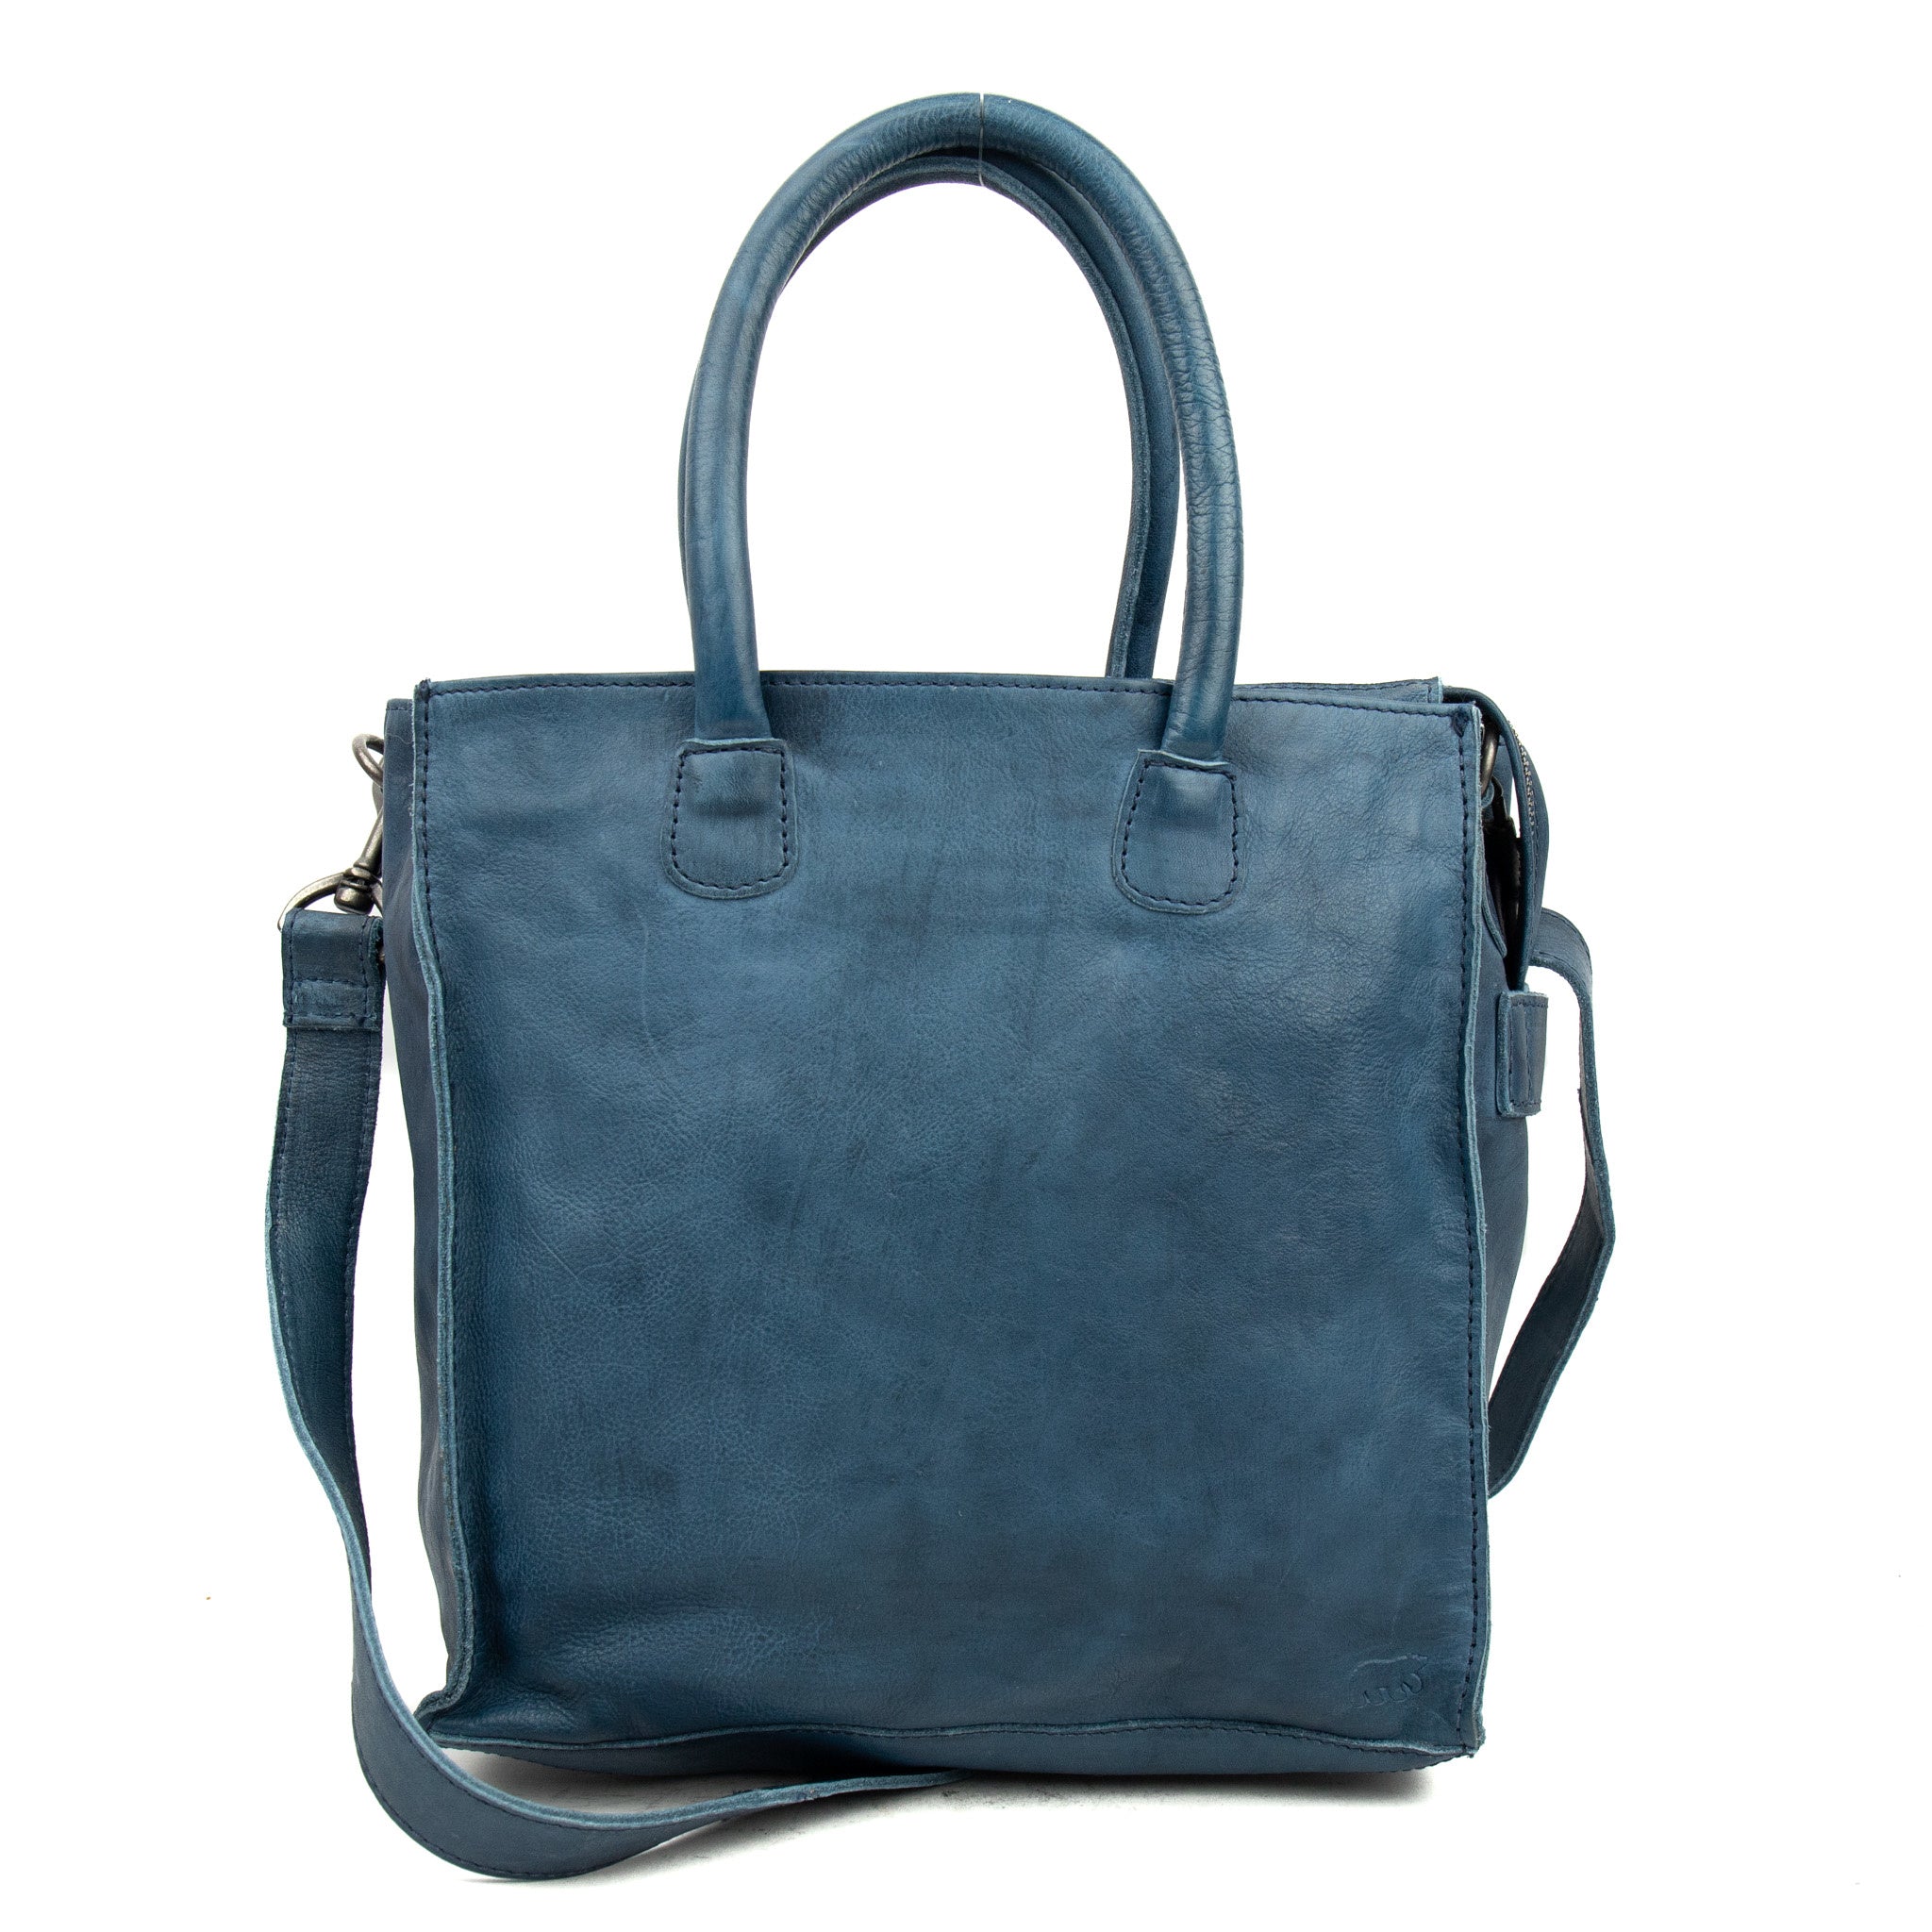 Hand/shoulder bag 'Bonnie' turquoise - CP 2172